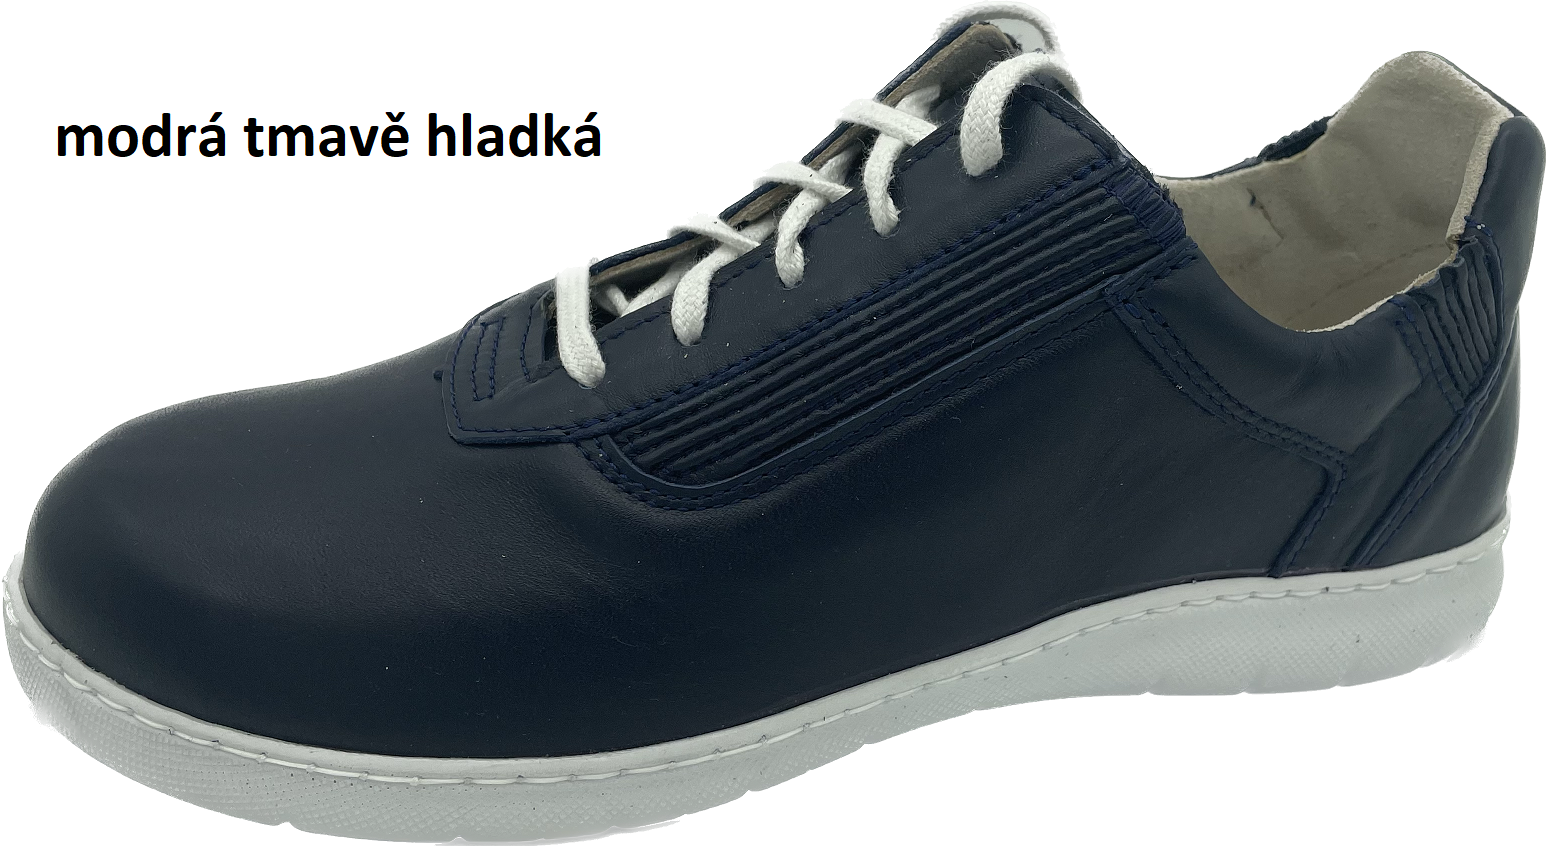 Boty Hanák Active Rita - SKLADEM Barva usně: modrá tmavě hladká, Velikosti obuvi: 42